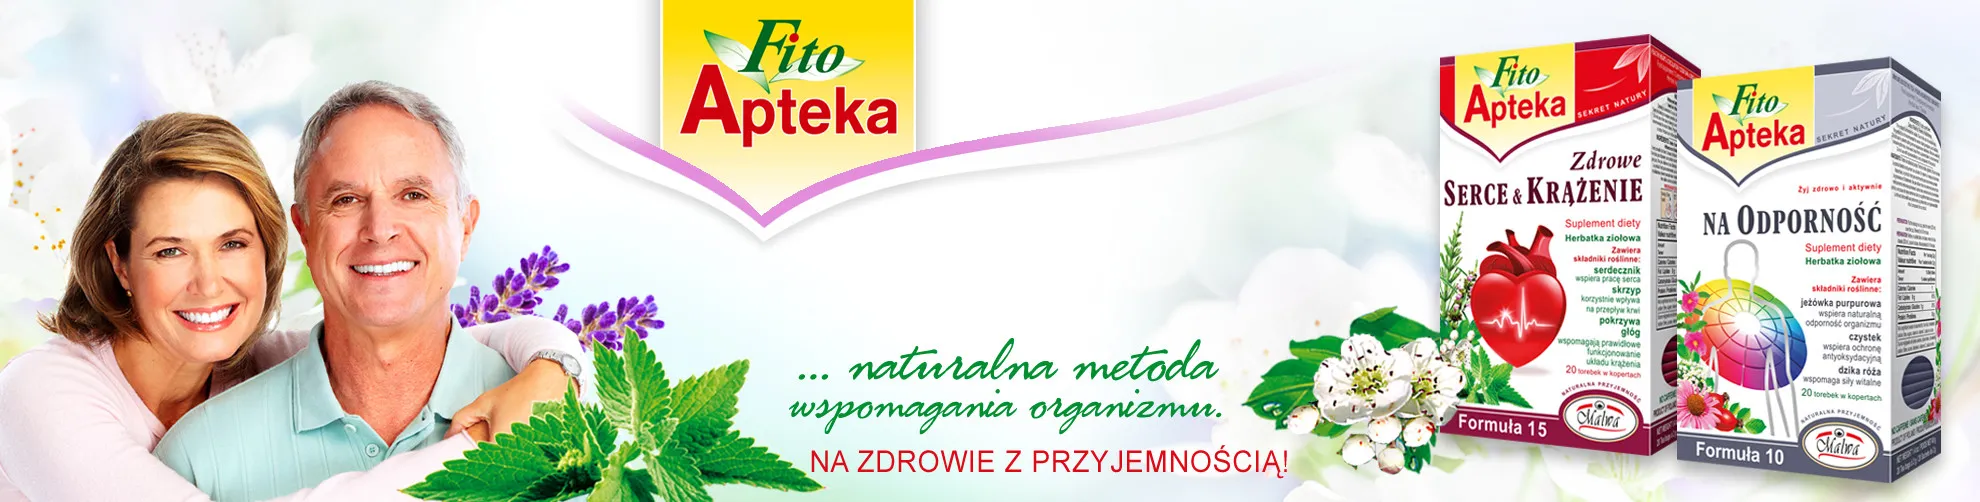 Malwa Tea - Herbaty Funkcjonalne Fito Apteka